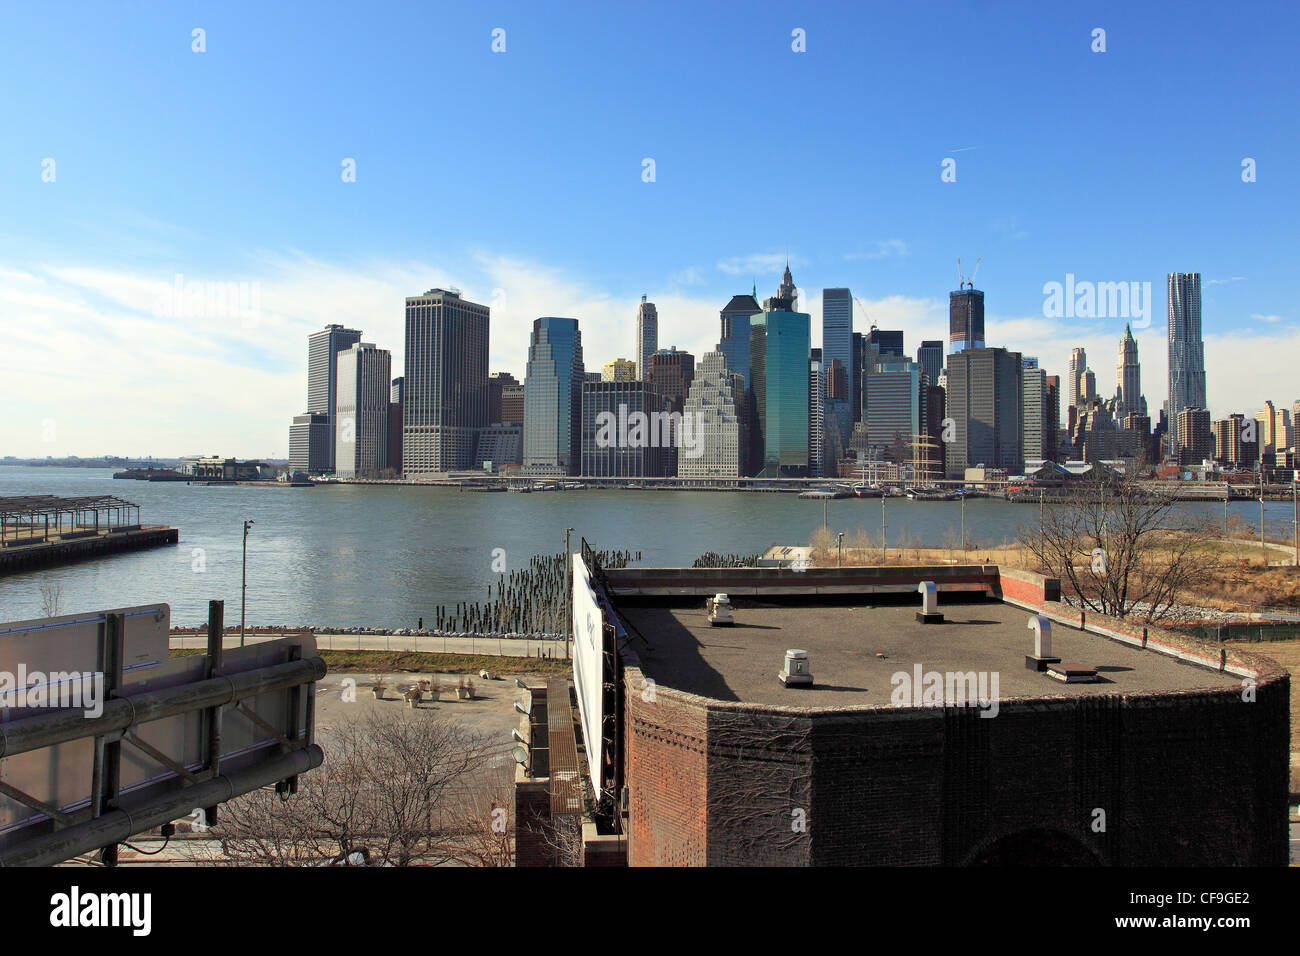 Lower Manhattan New York City Brooklyn vu de l'autre côté de l'East River. Banque D'Images